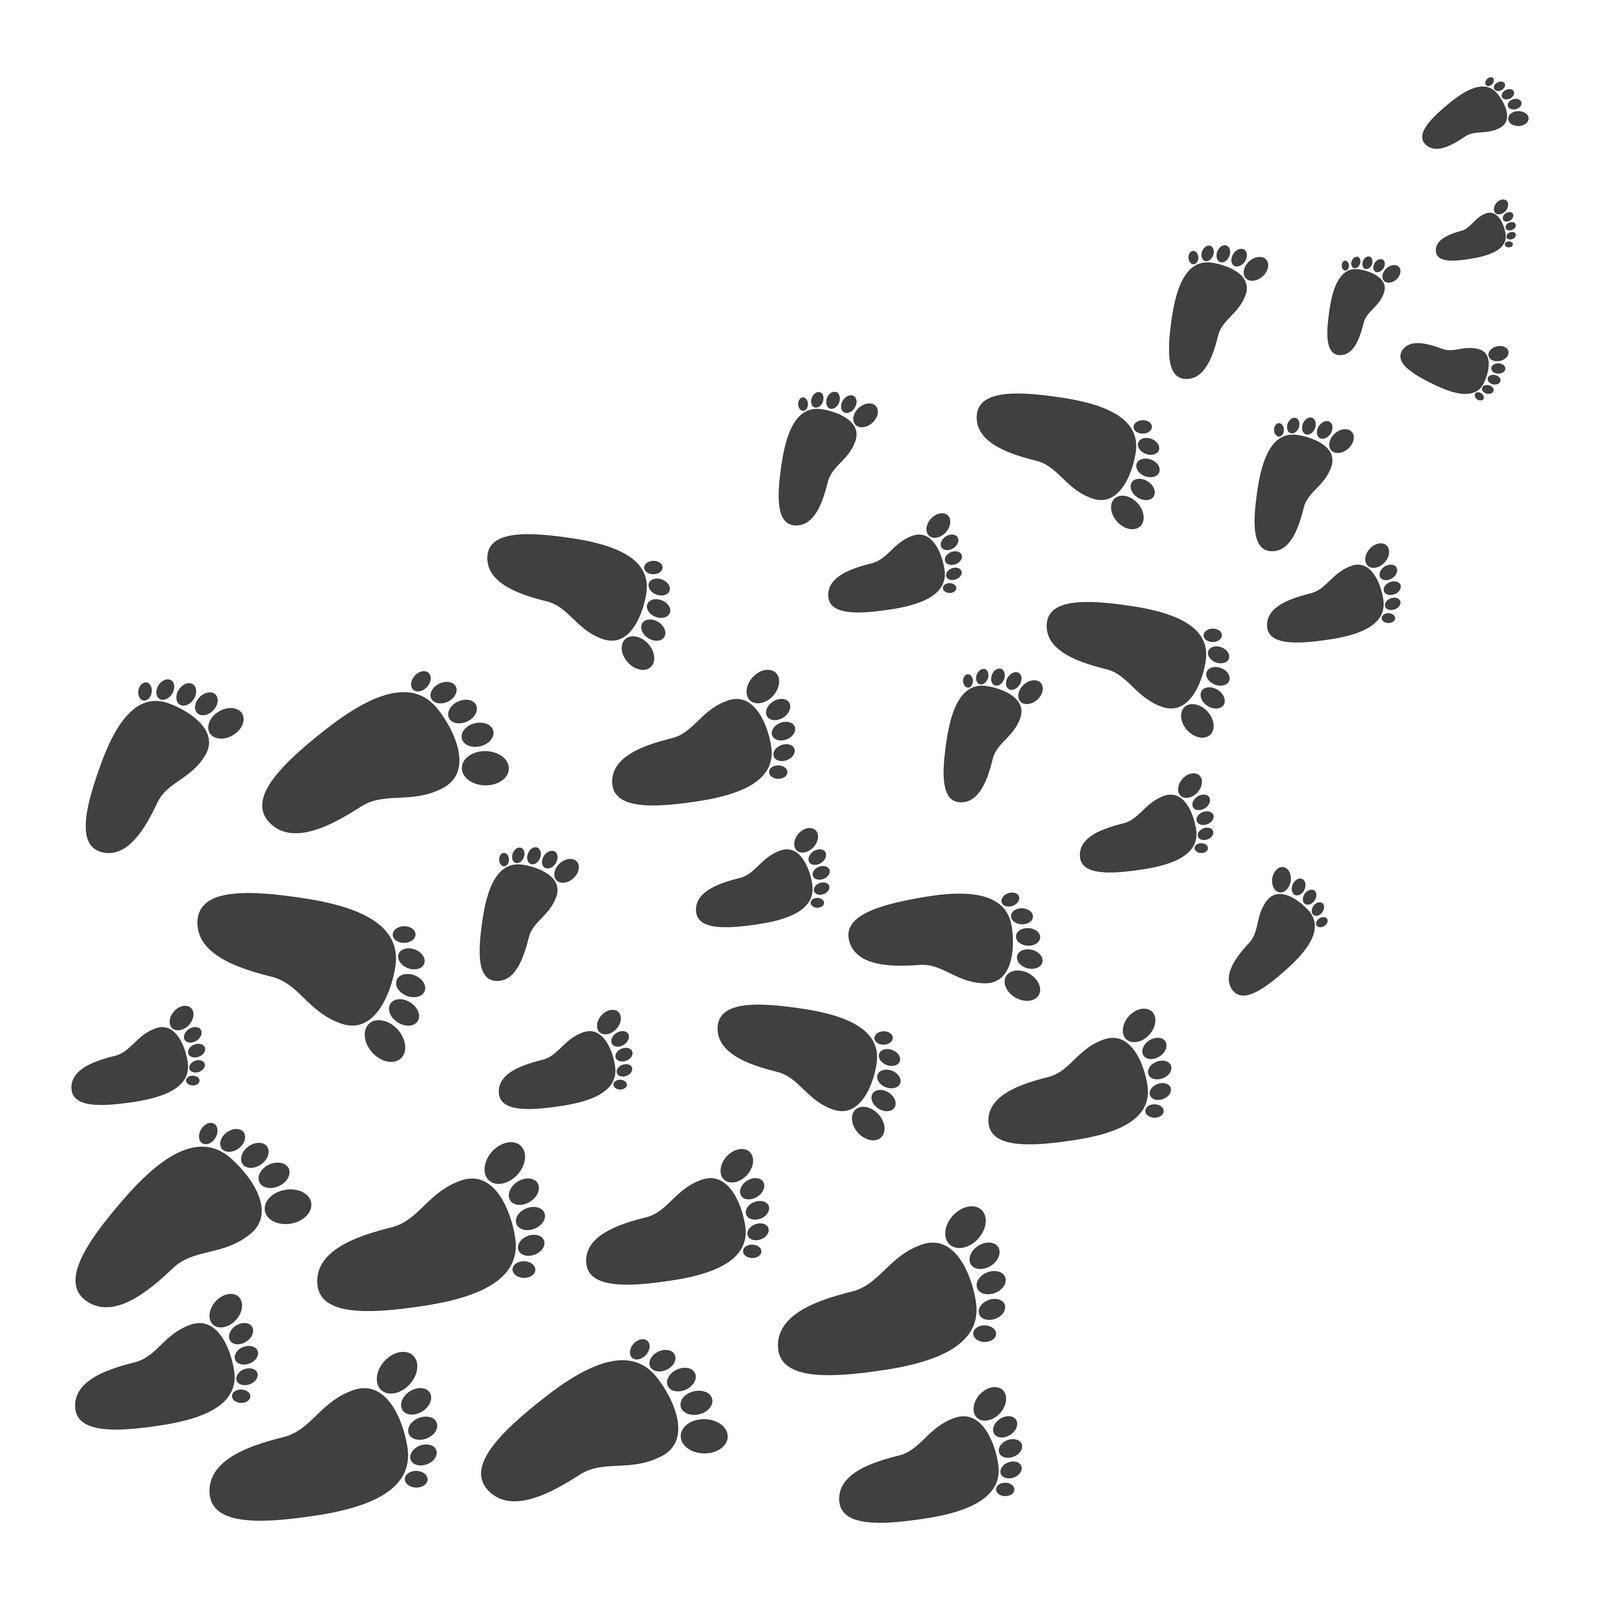 Foot vector icon illustration by Attades19